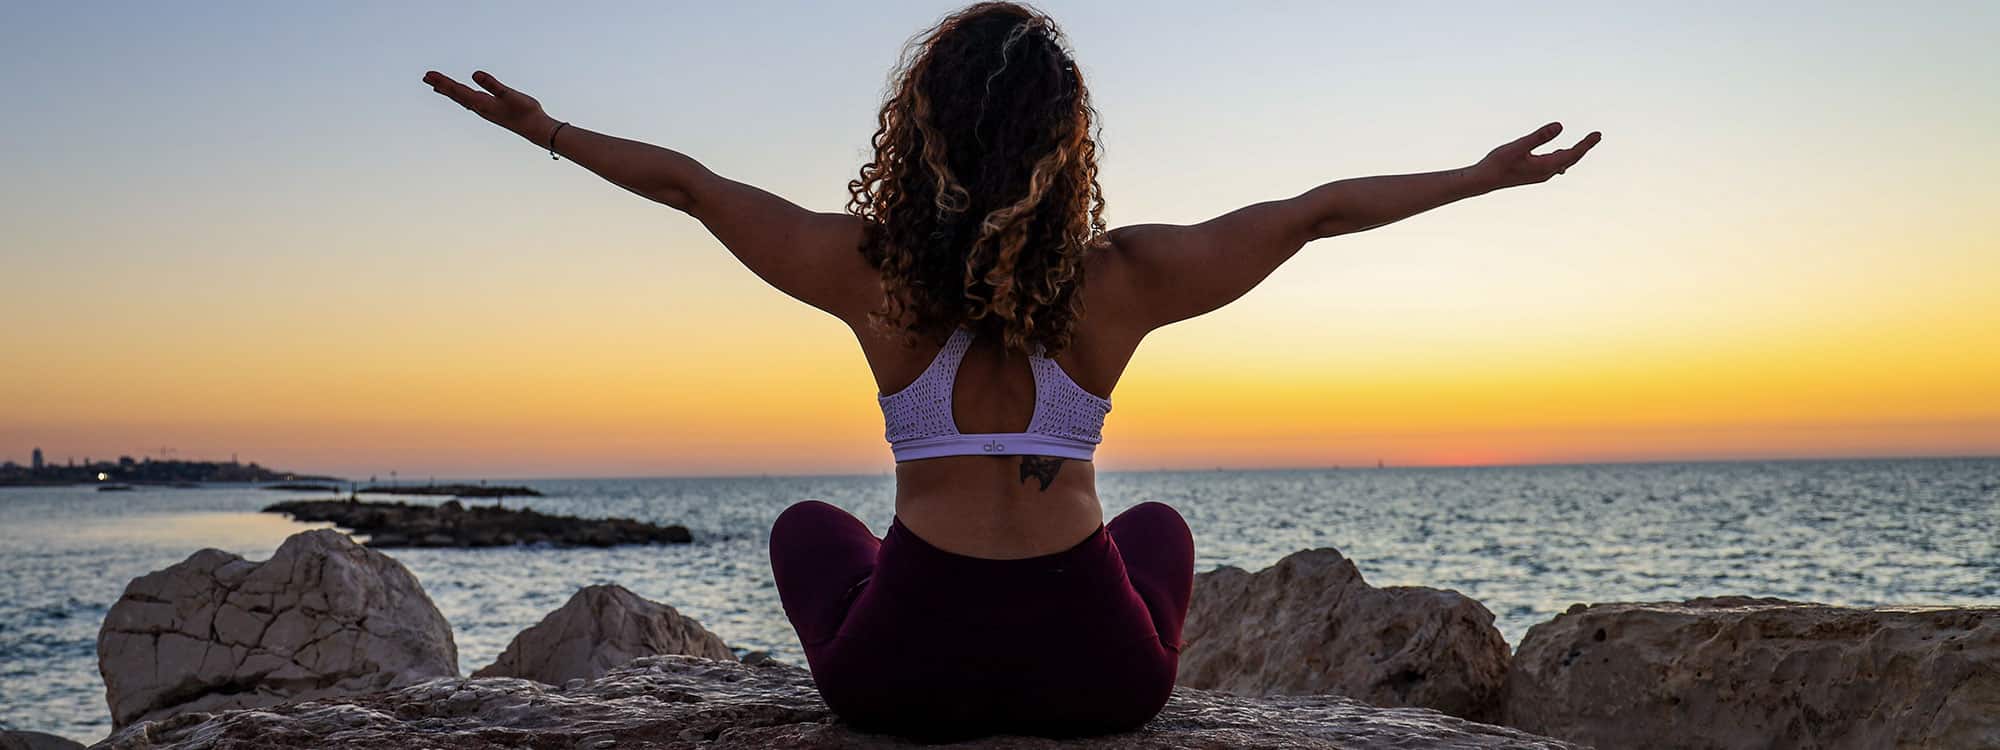 Find Your Zen with Outdoor Yoga - Greenbelt Alliance